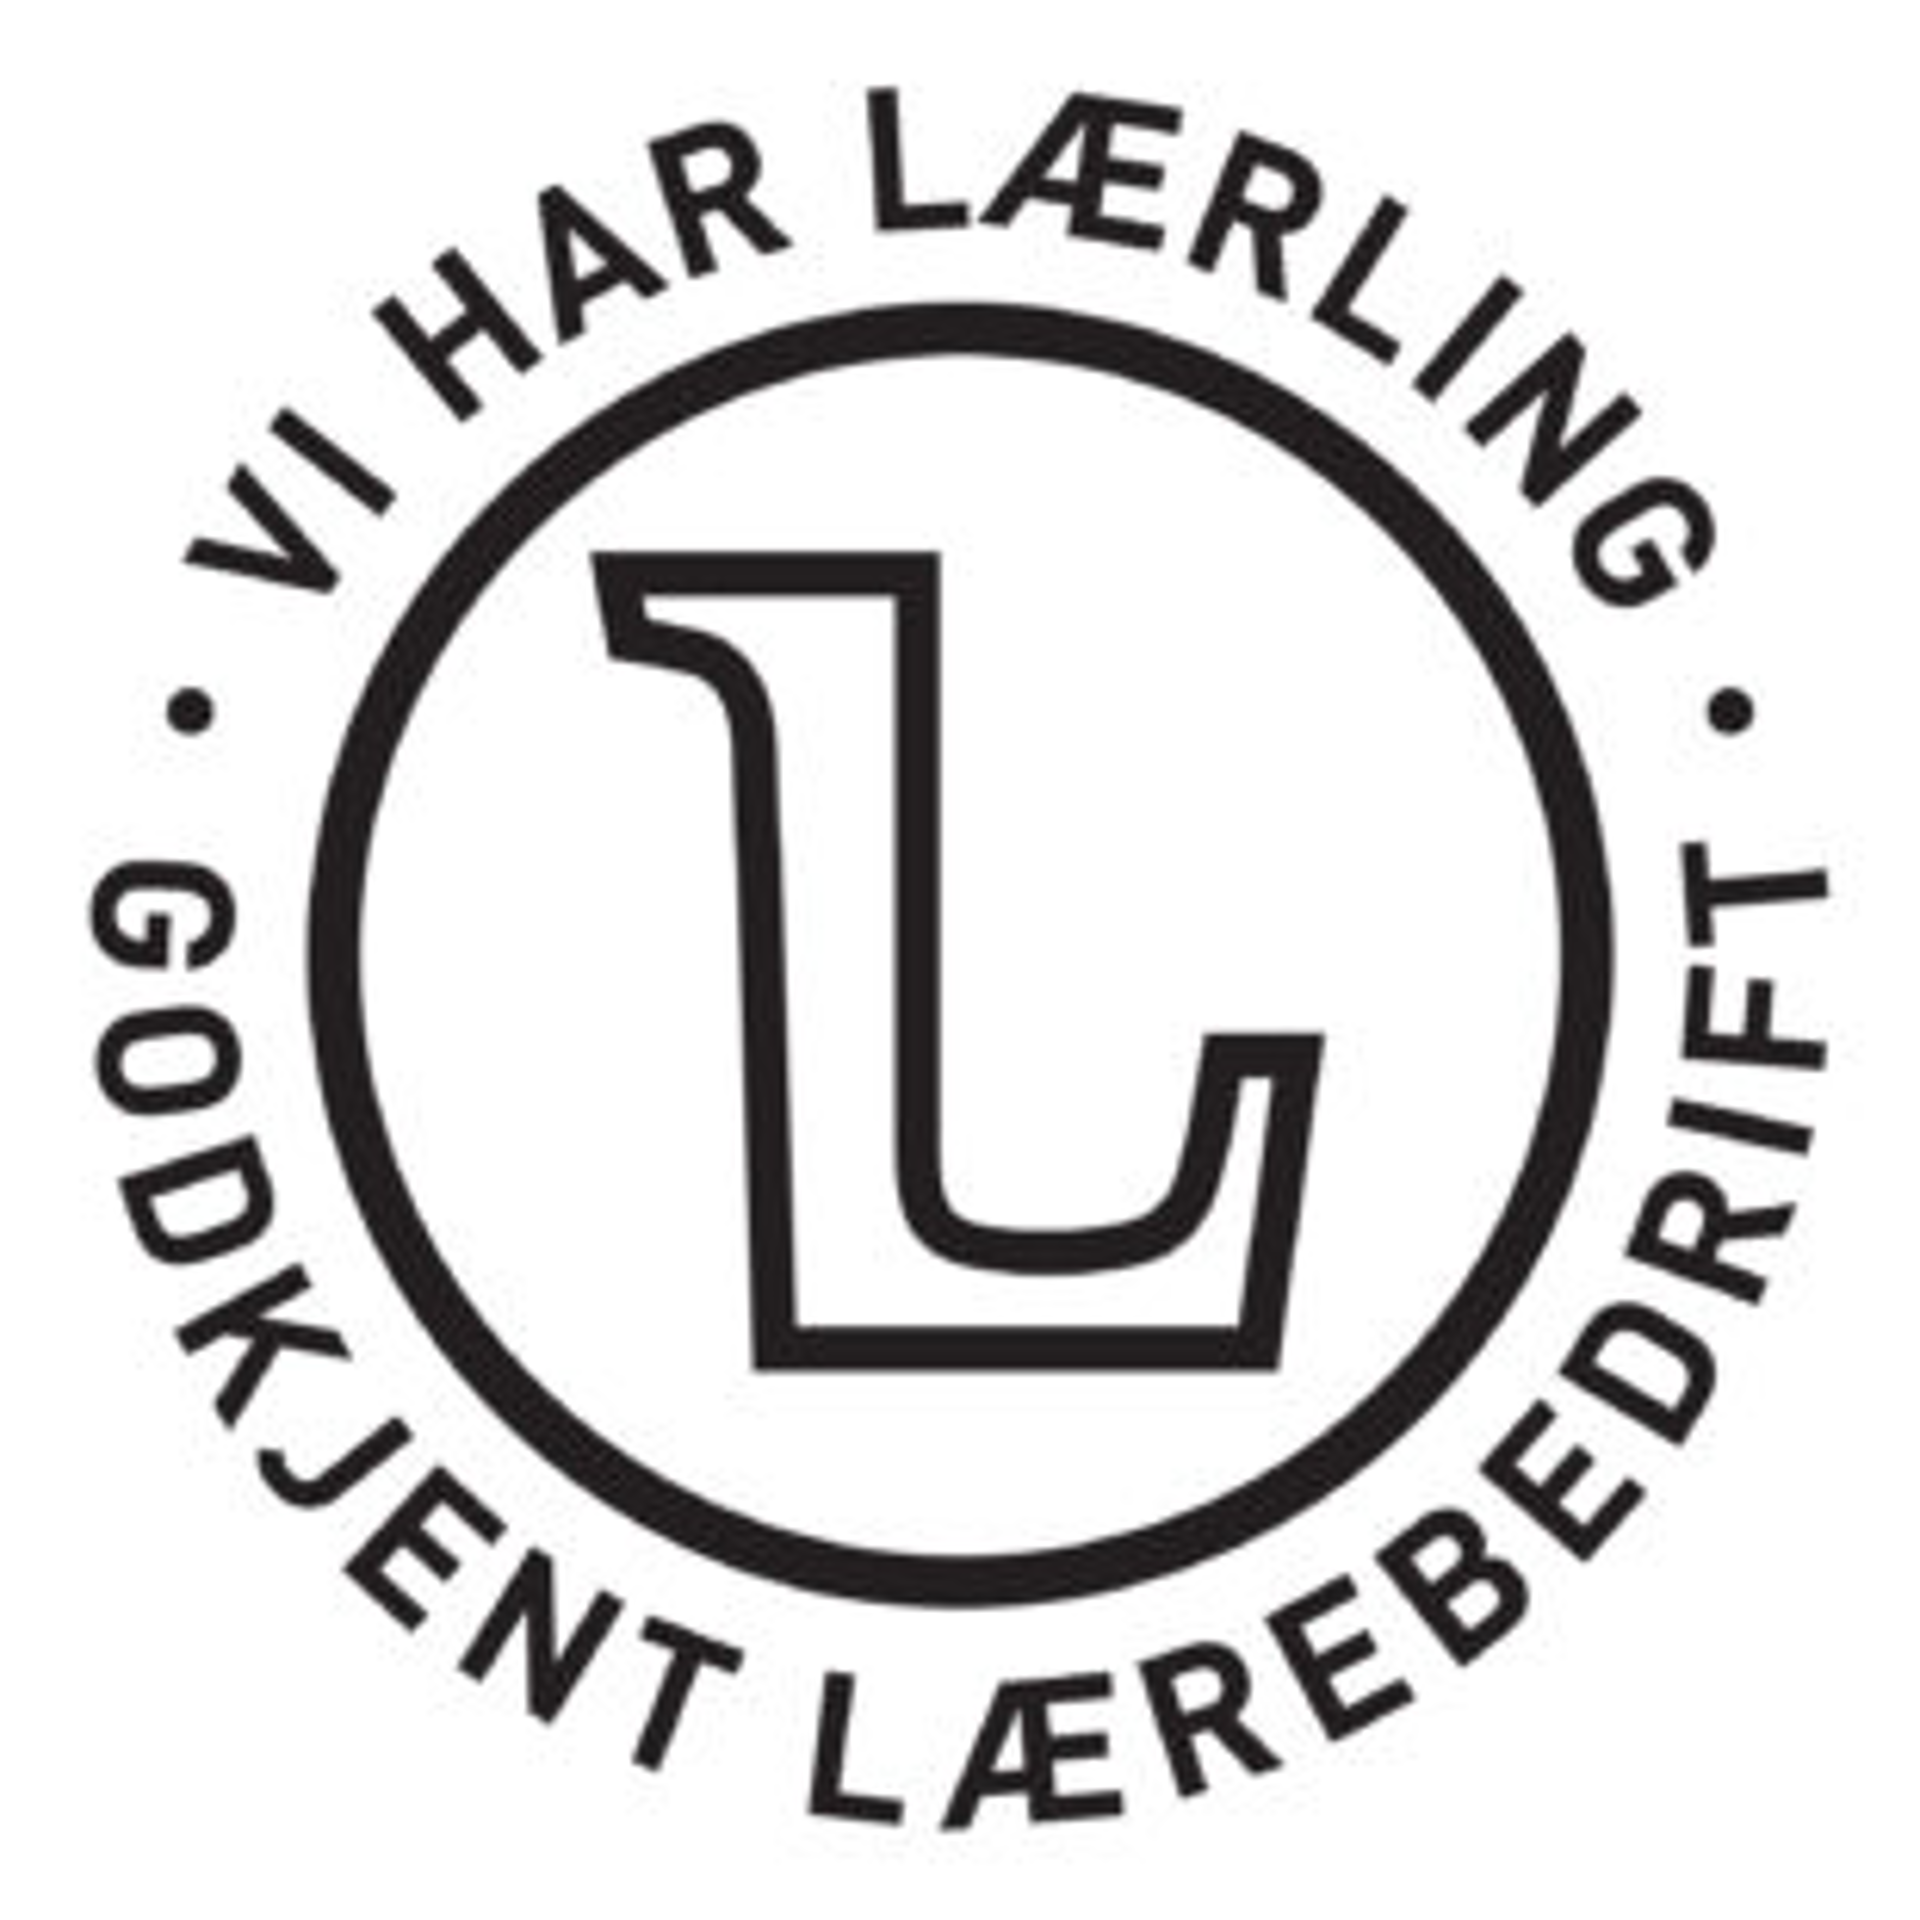 Laerling